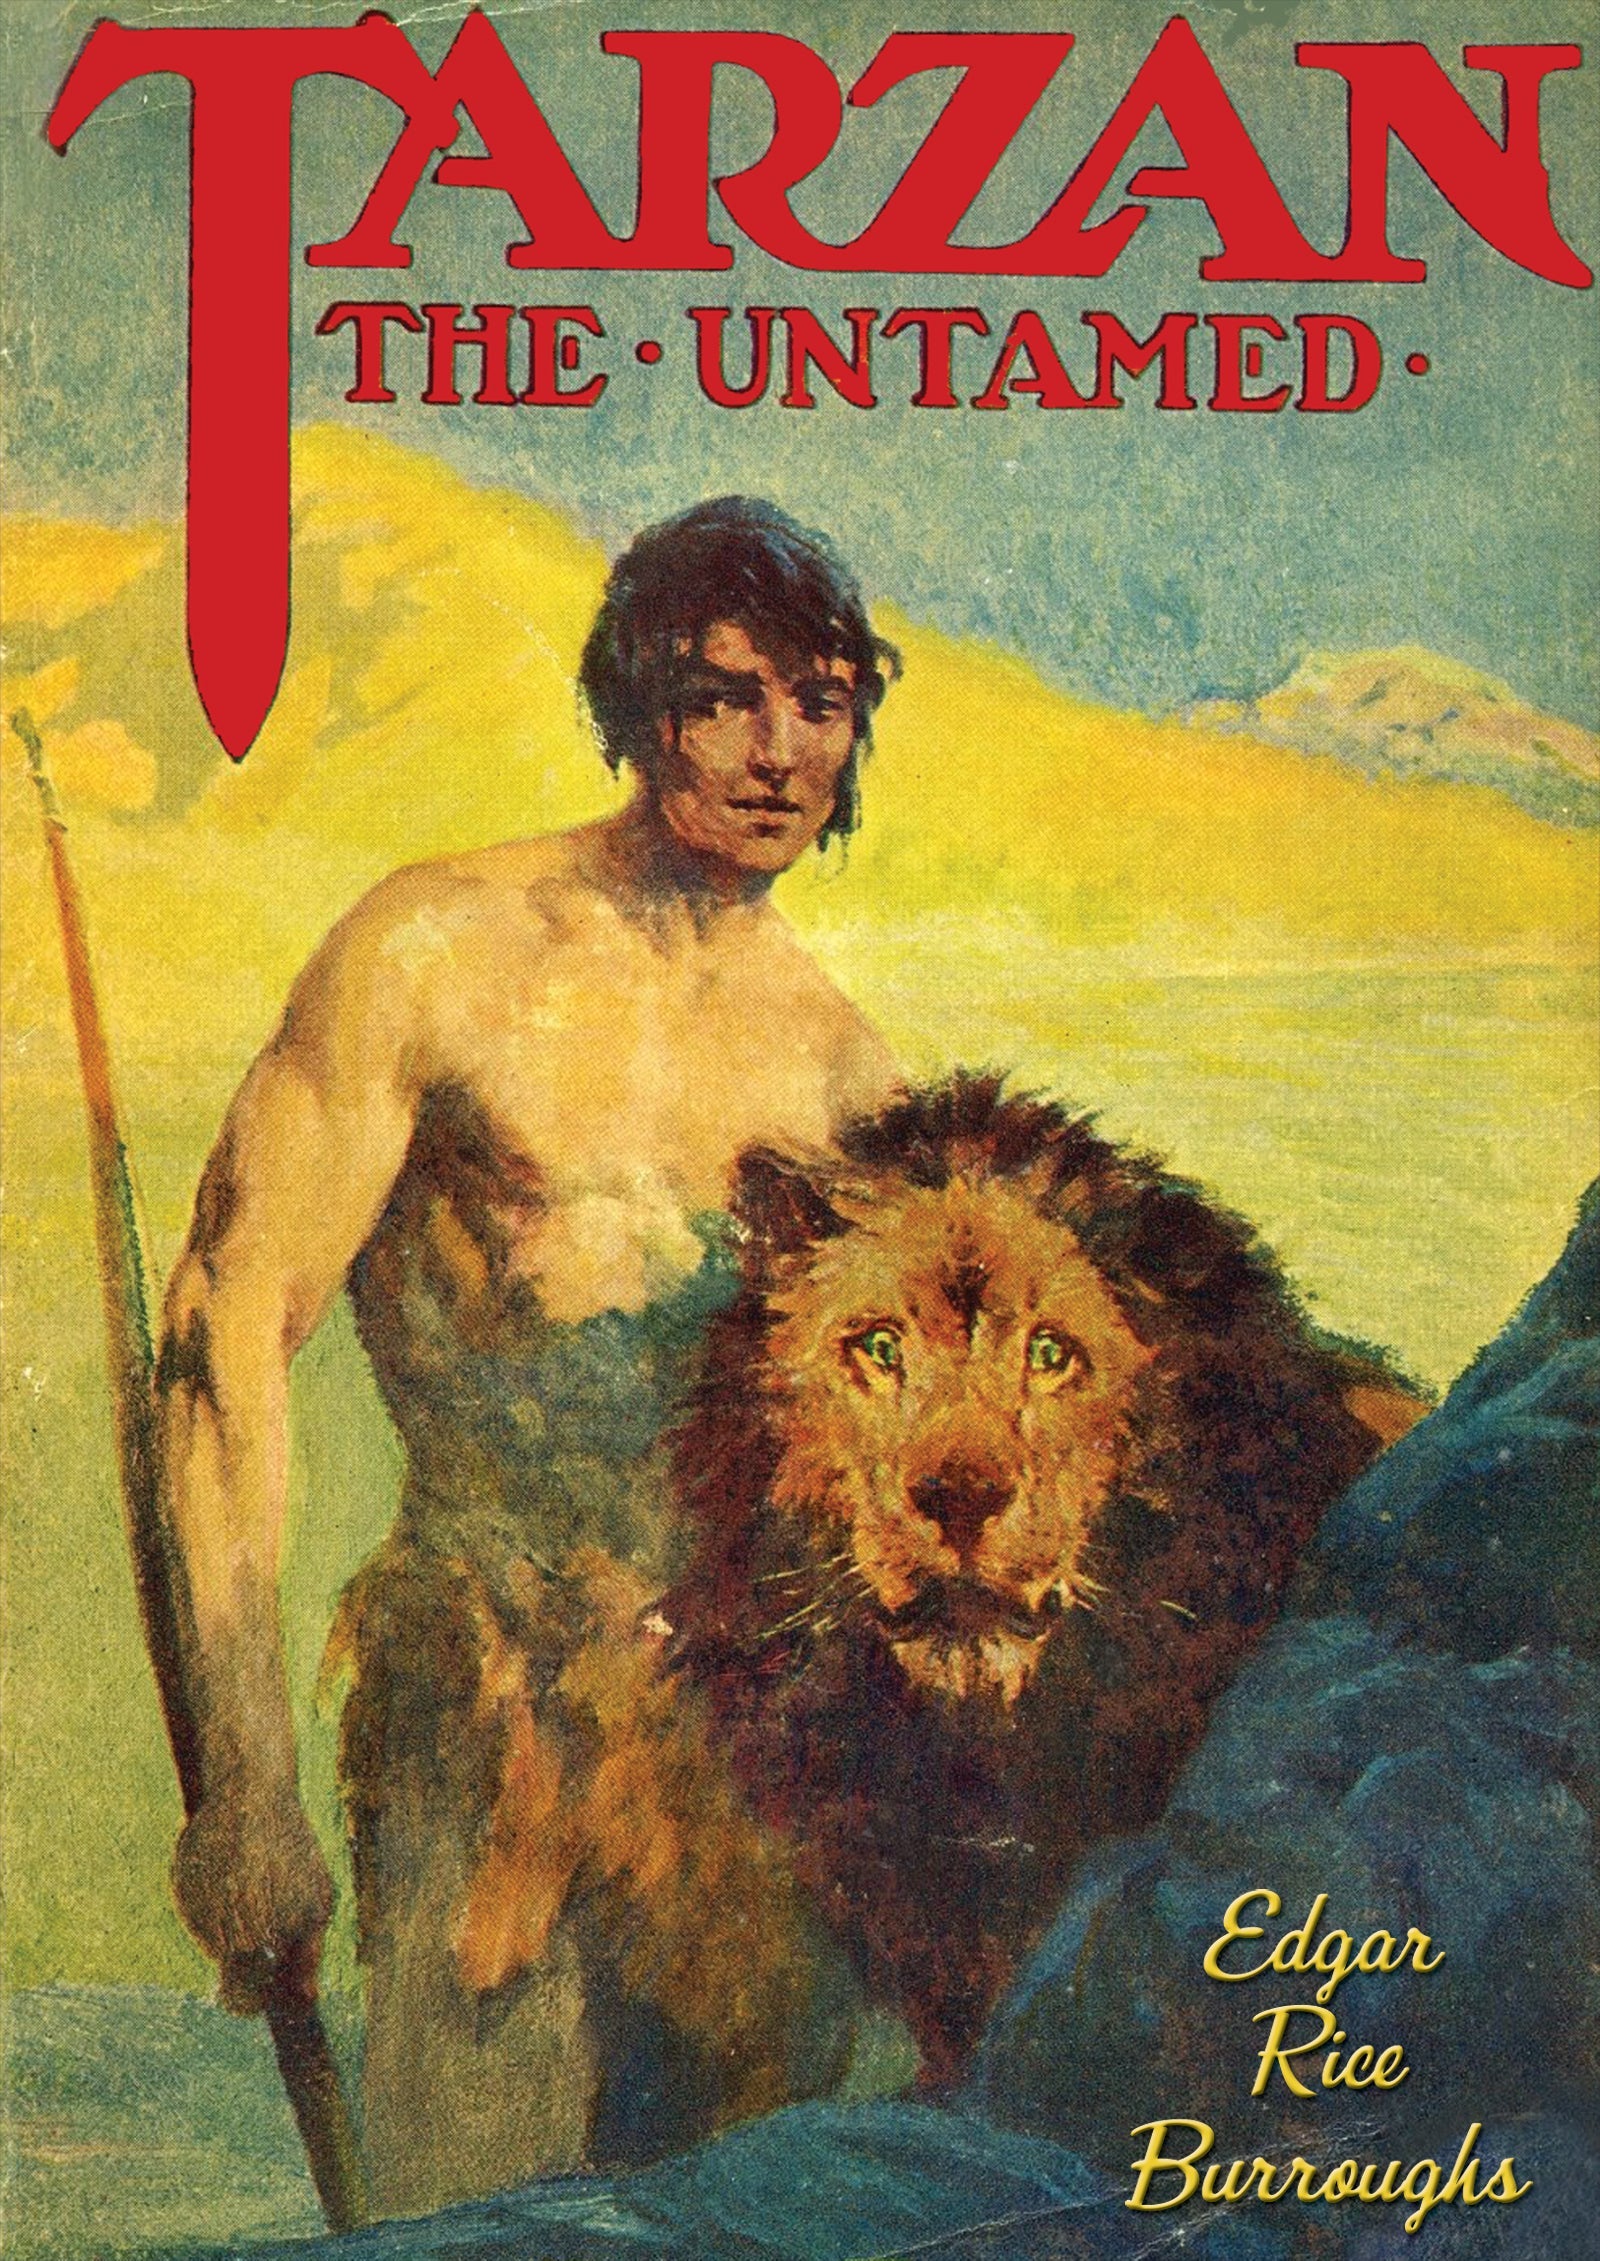 Cover art for Tarzan the Untamed.